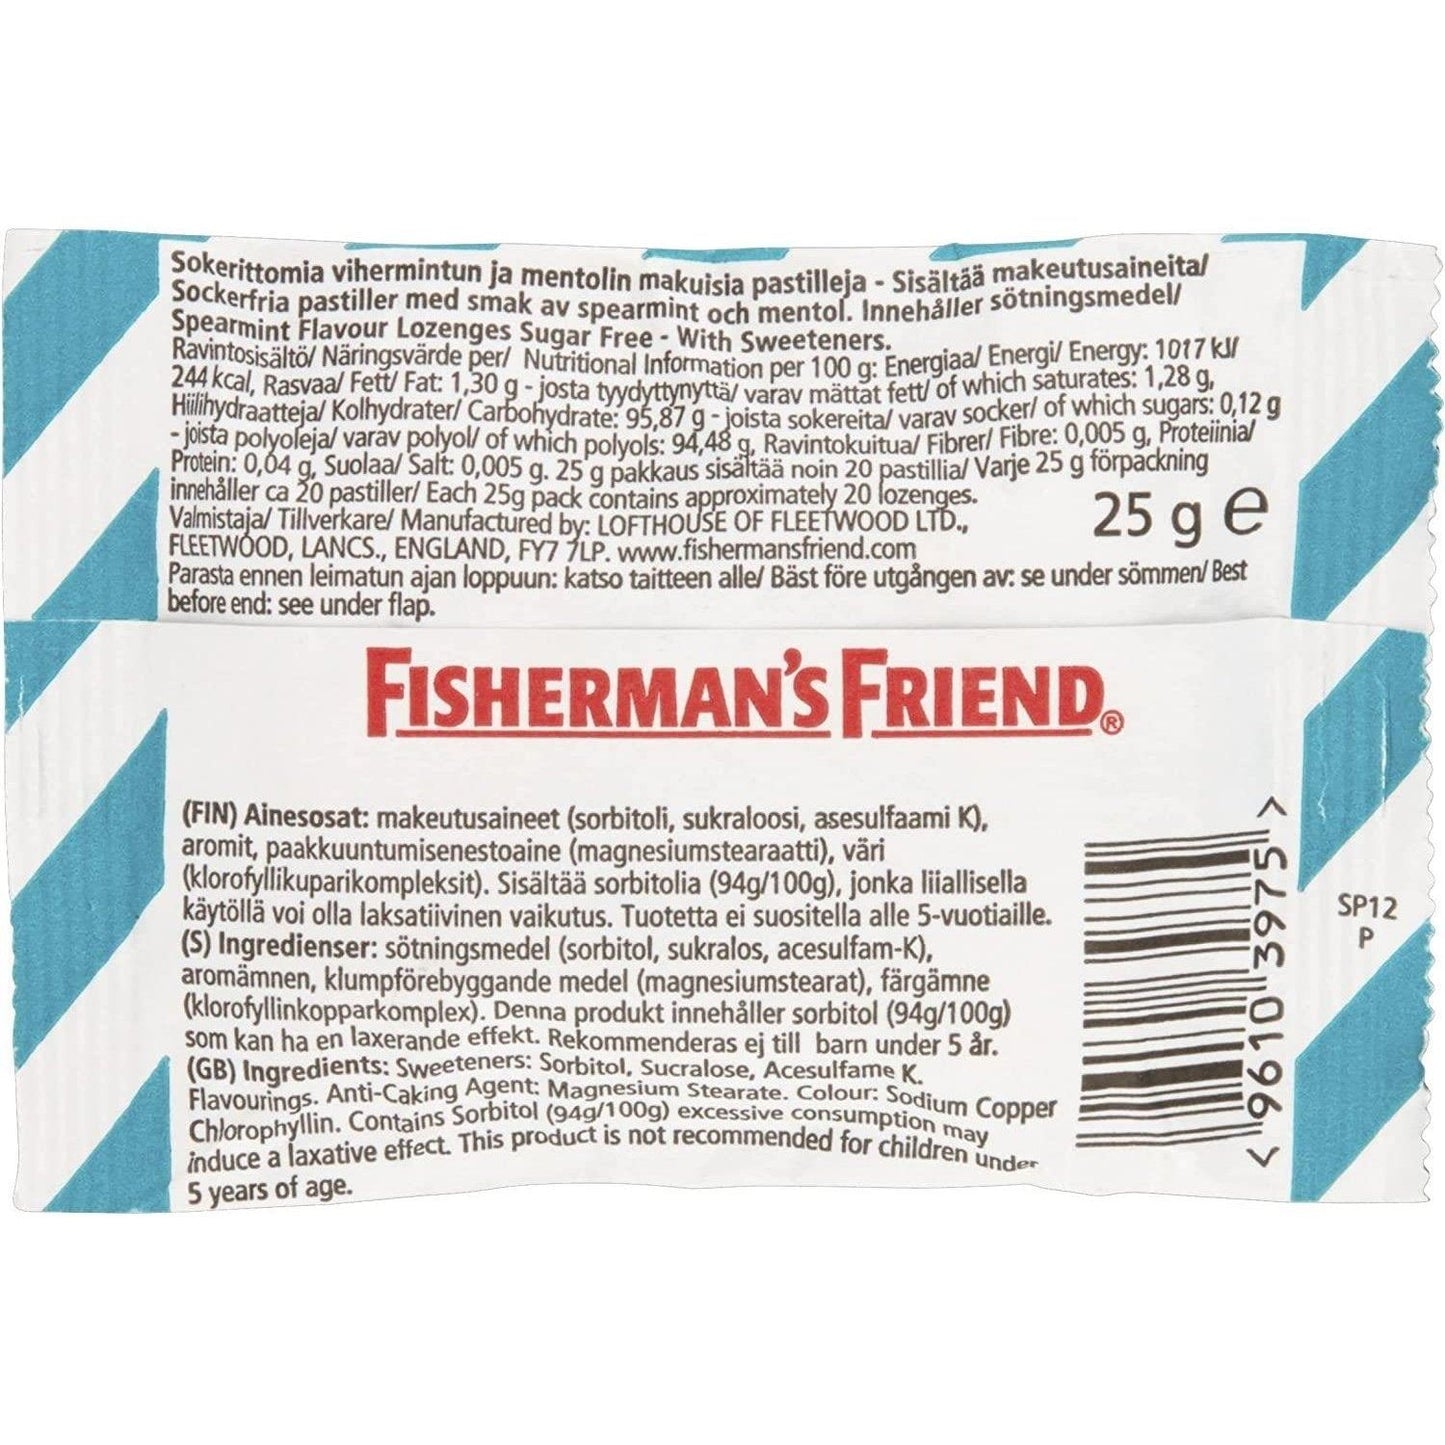 Fisherman's Friends Spearmint Sugar Free Lozenges 25g